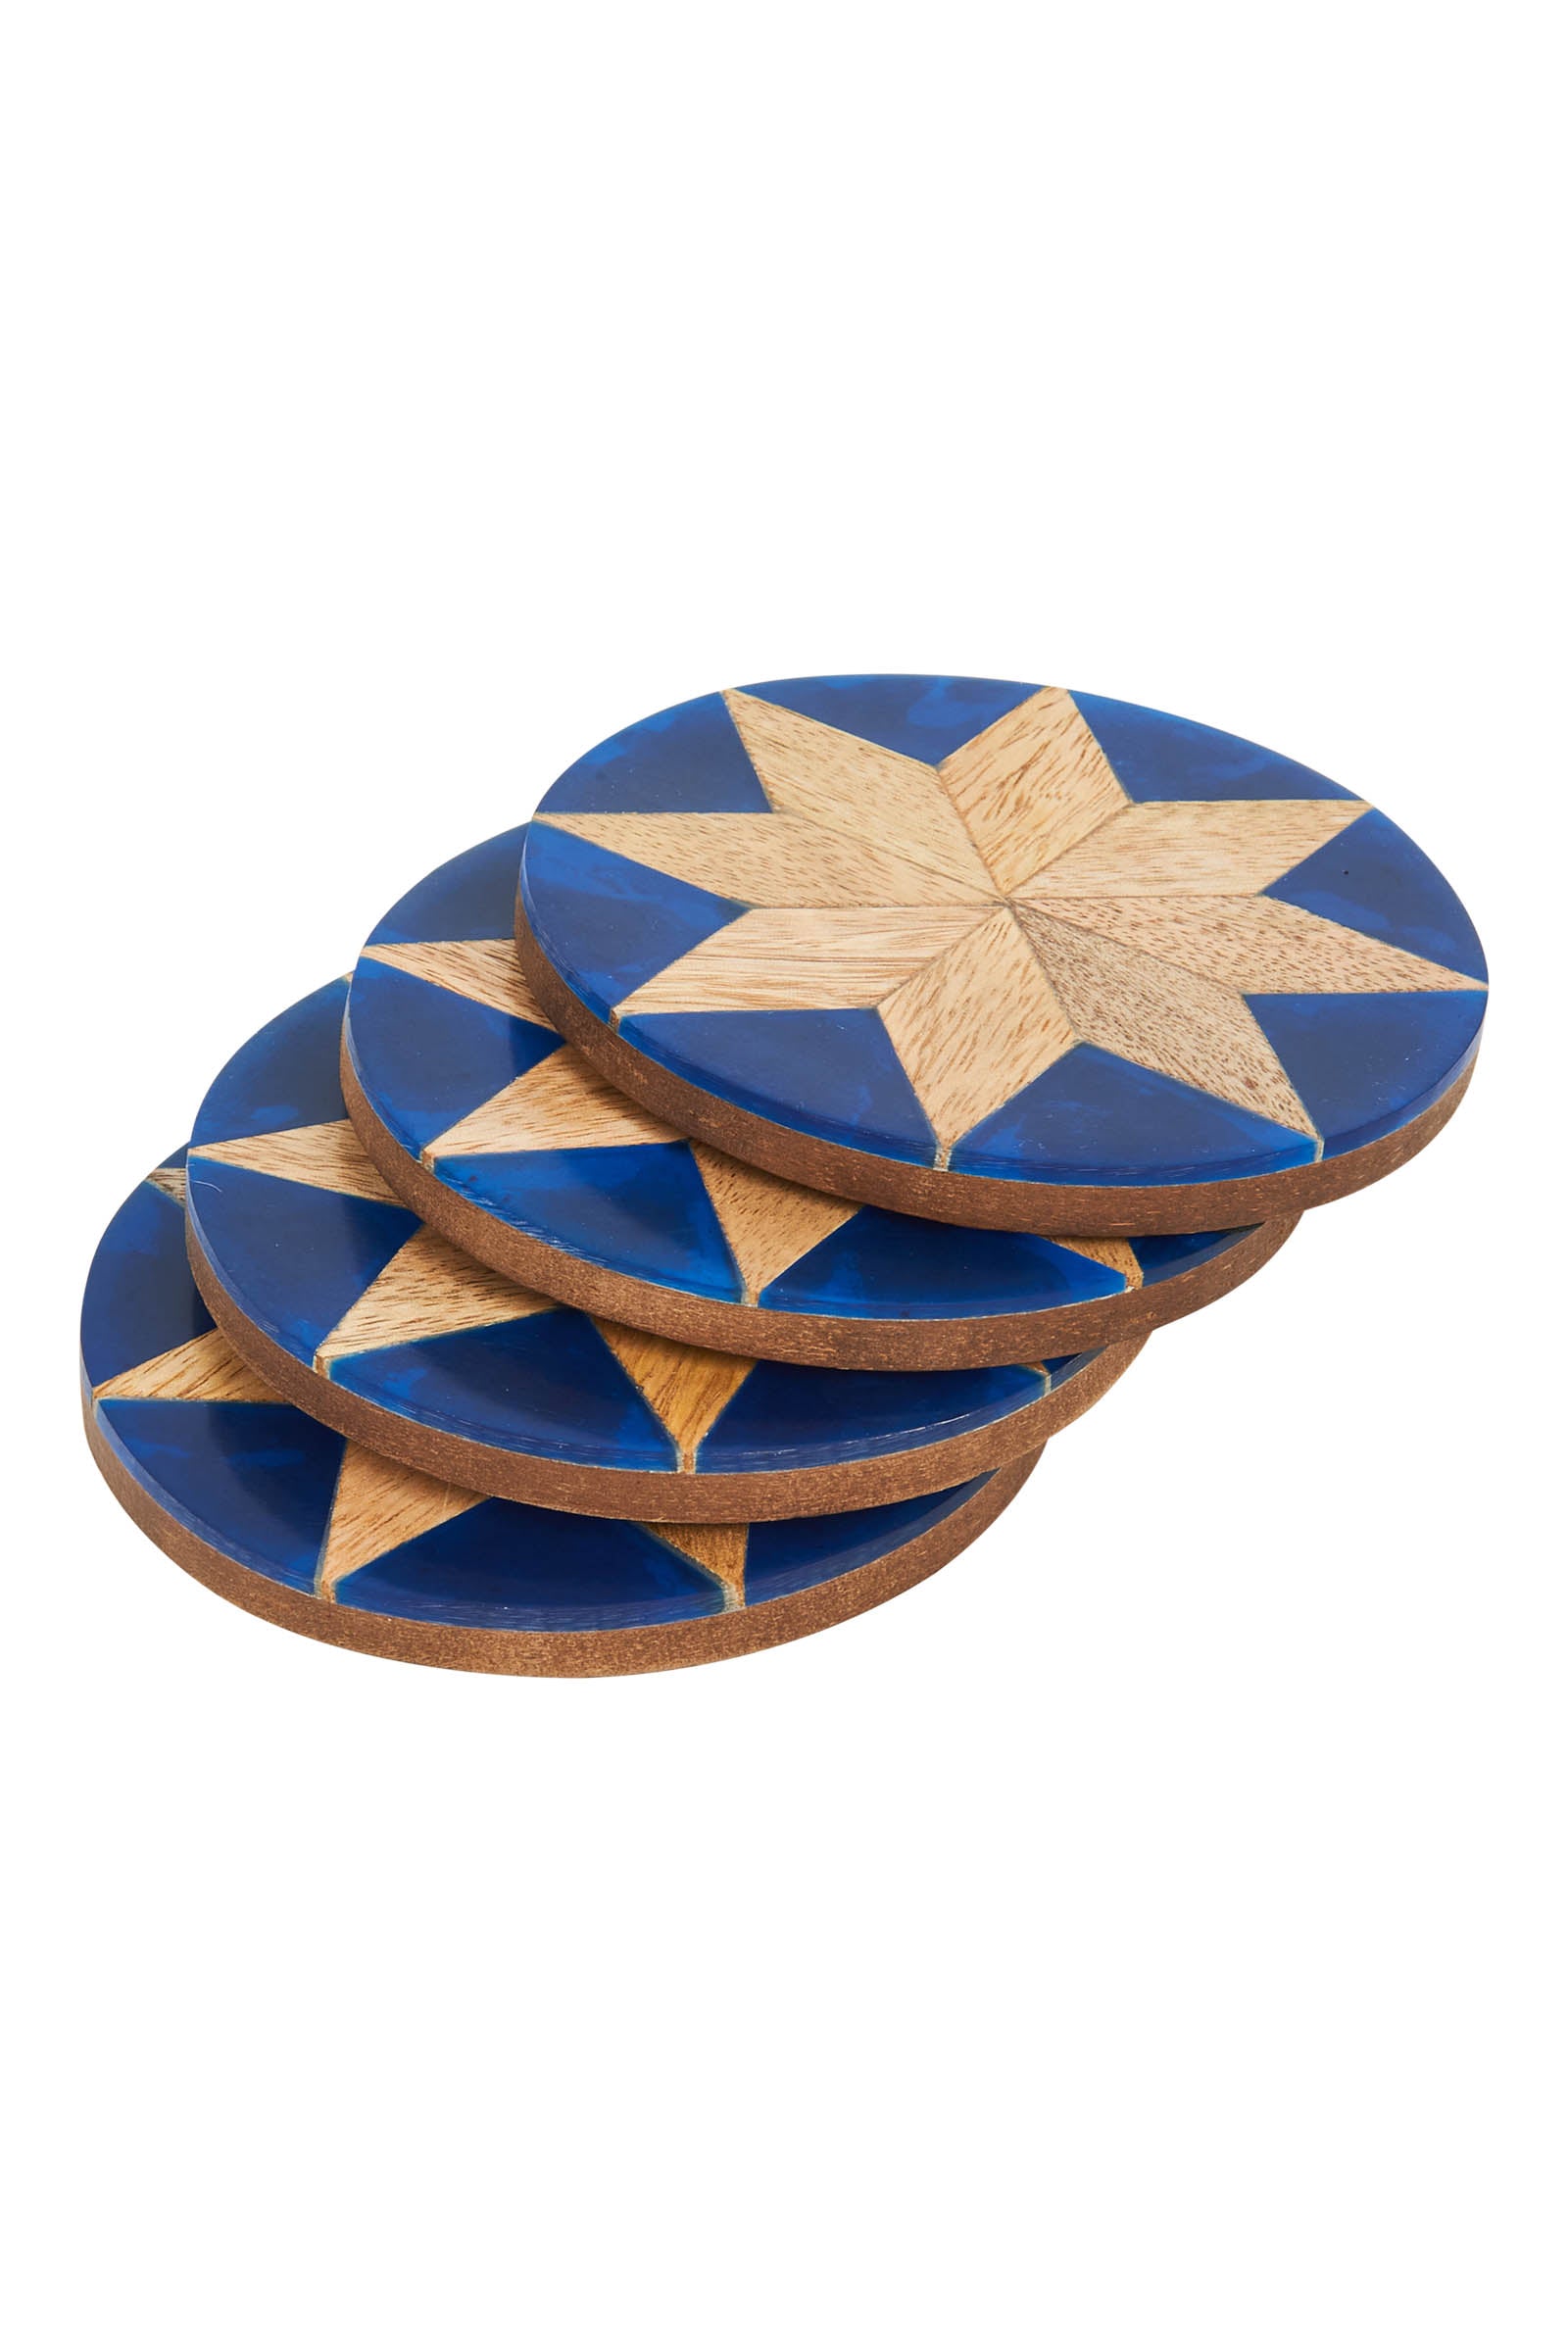 Lotus Coaster Set - Sapphire - eb&ive Table Top